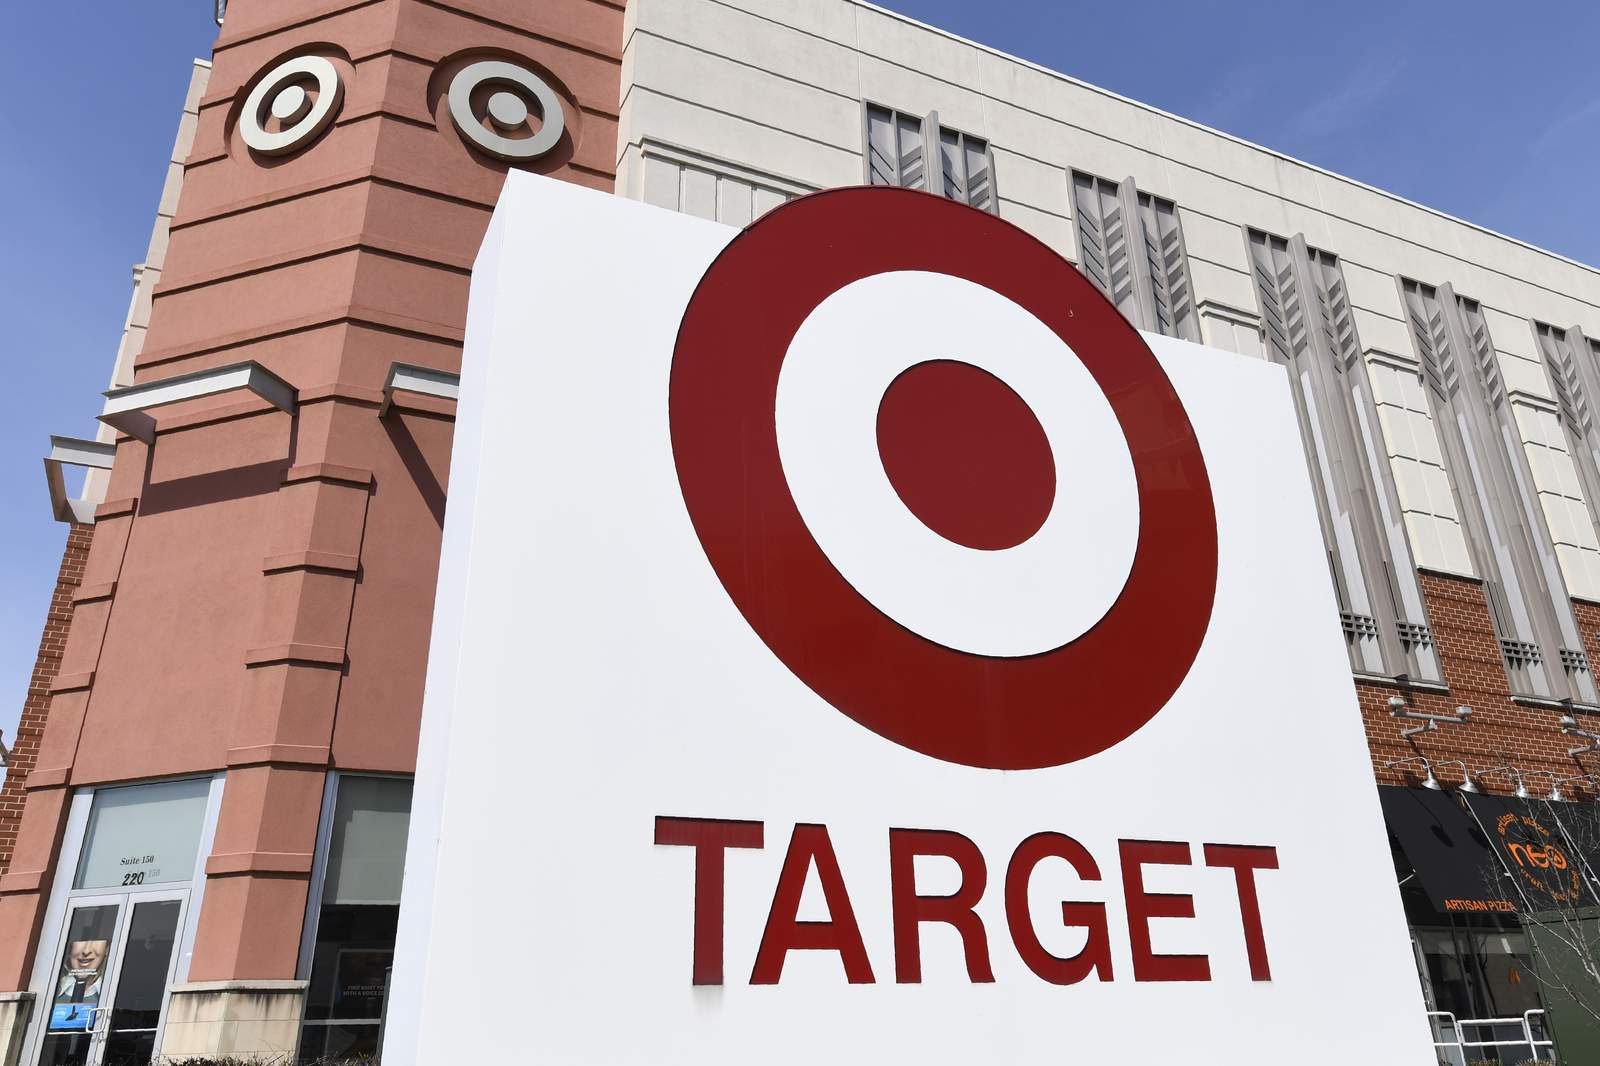 Target joins Walmart in ending Thanksgiving store shopping